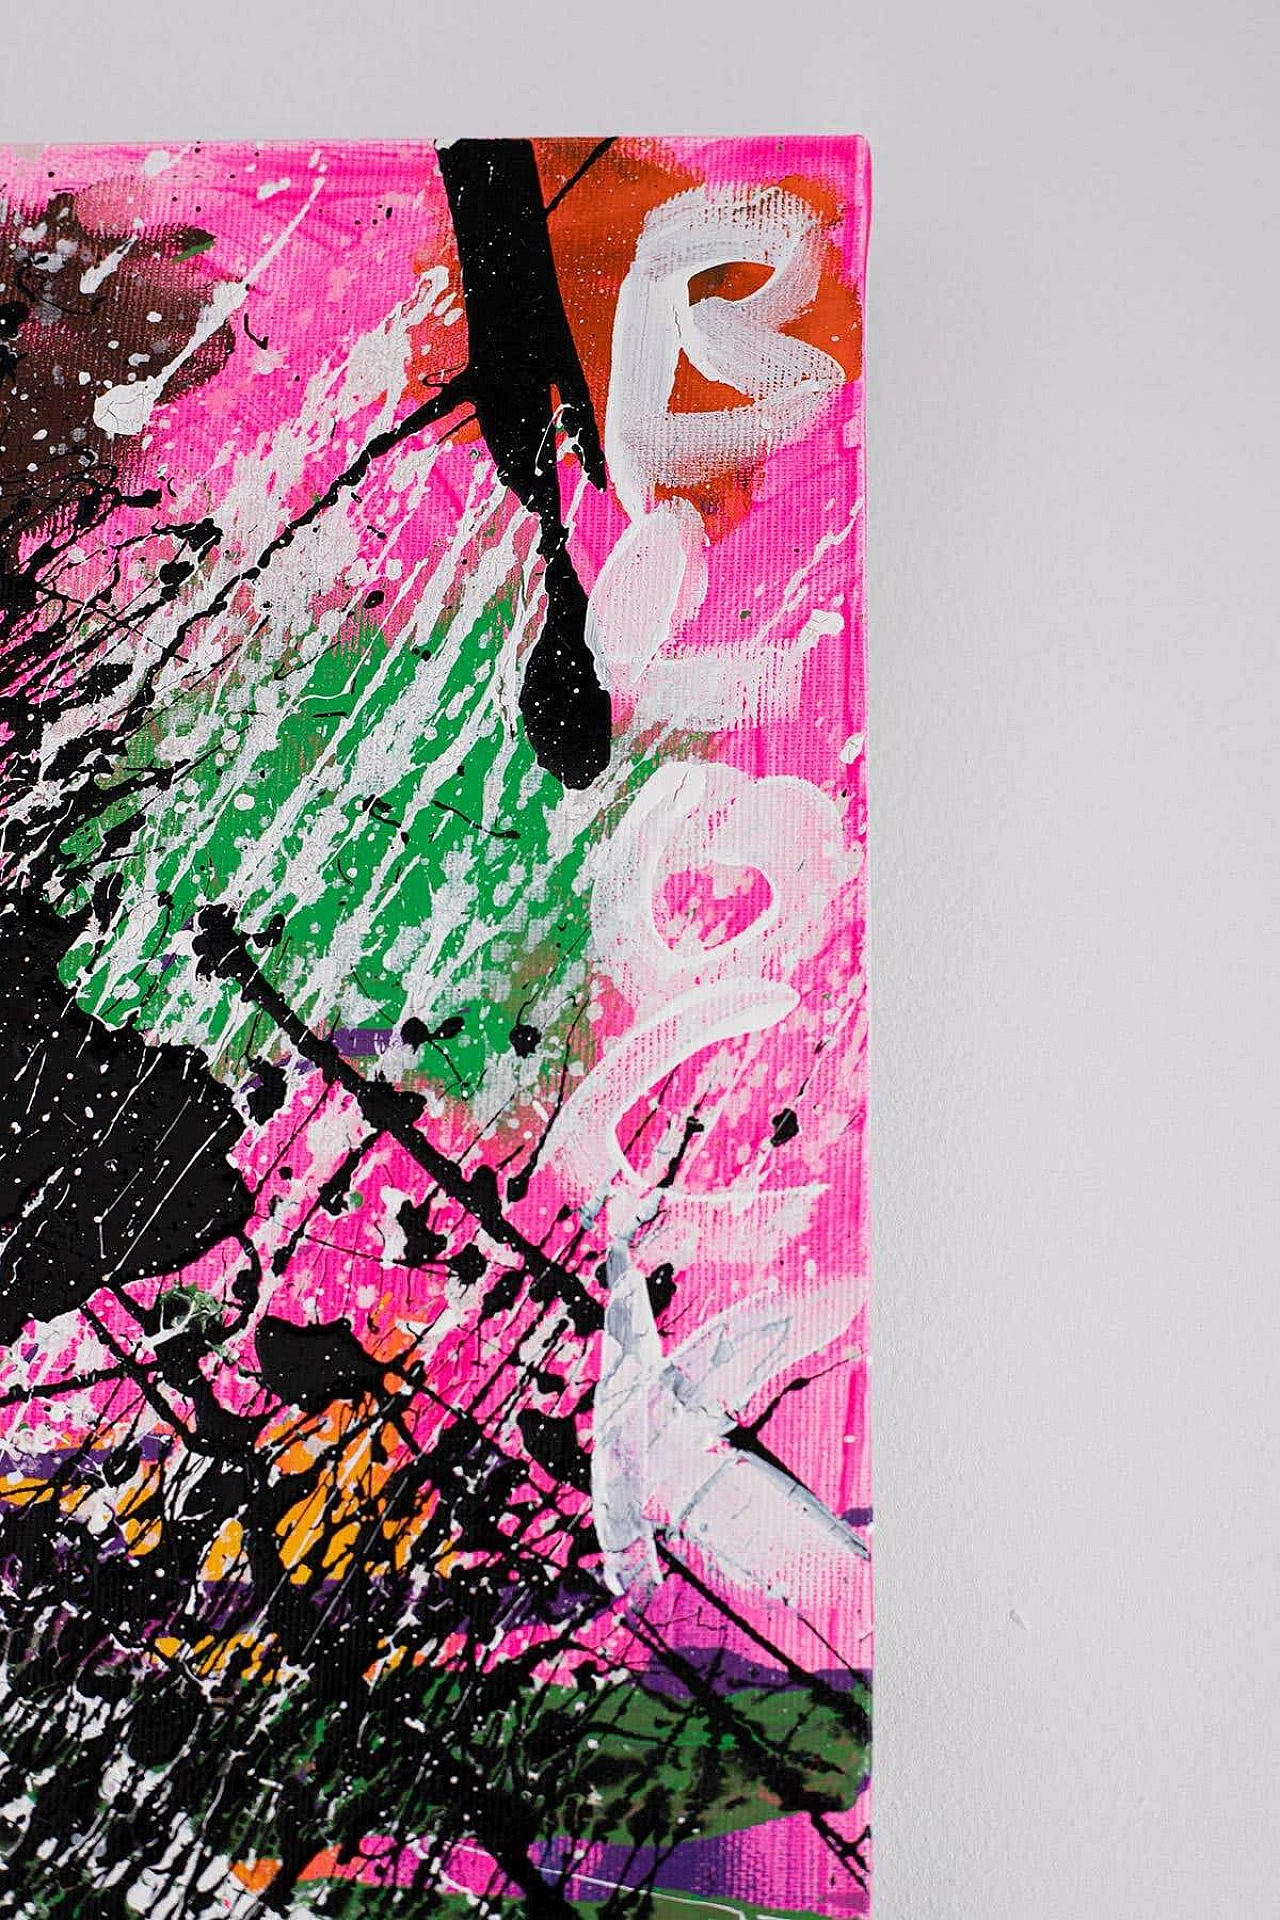 Bomberbax, mixed media, tempera and paint on canvas, 2021 6